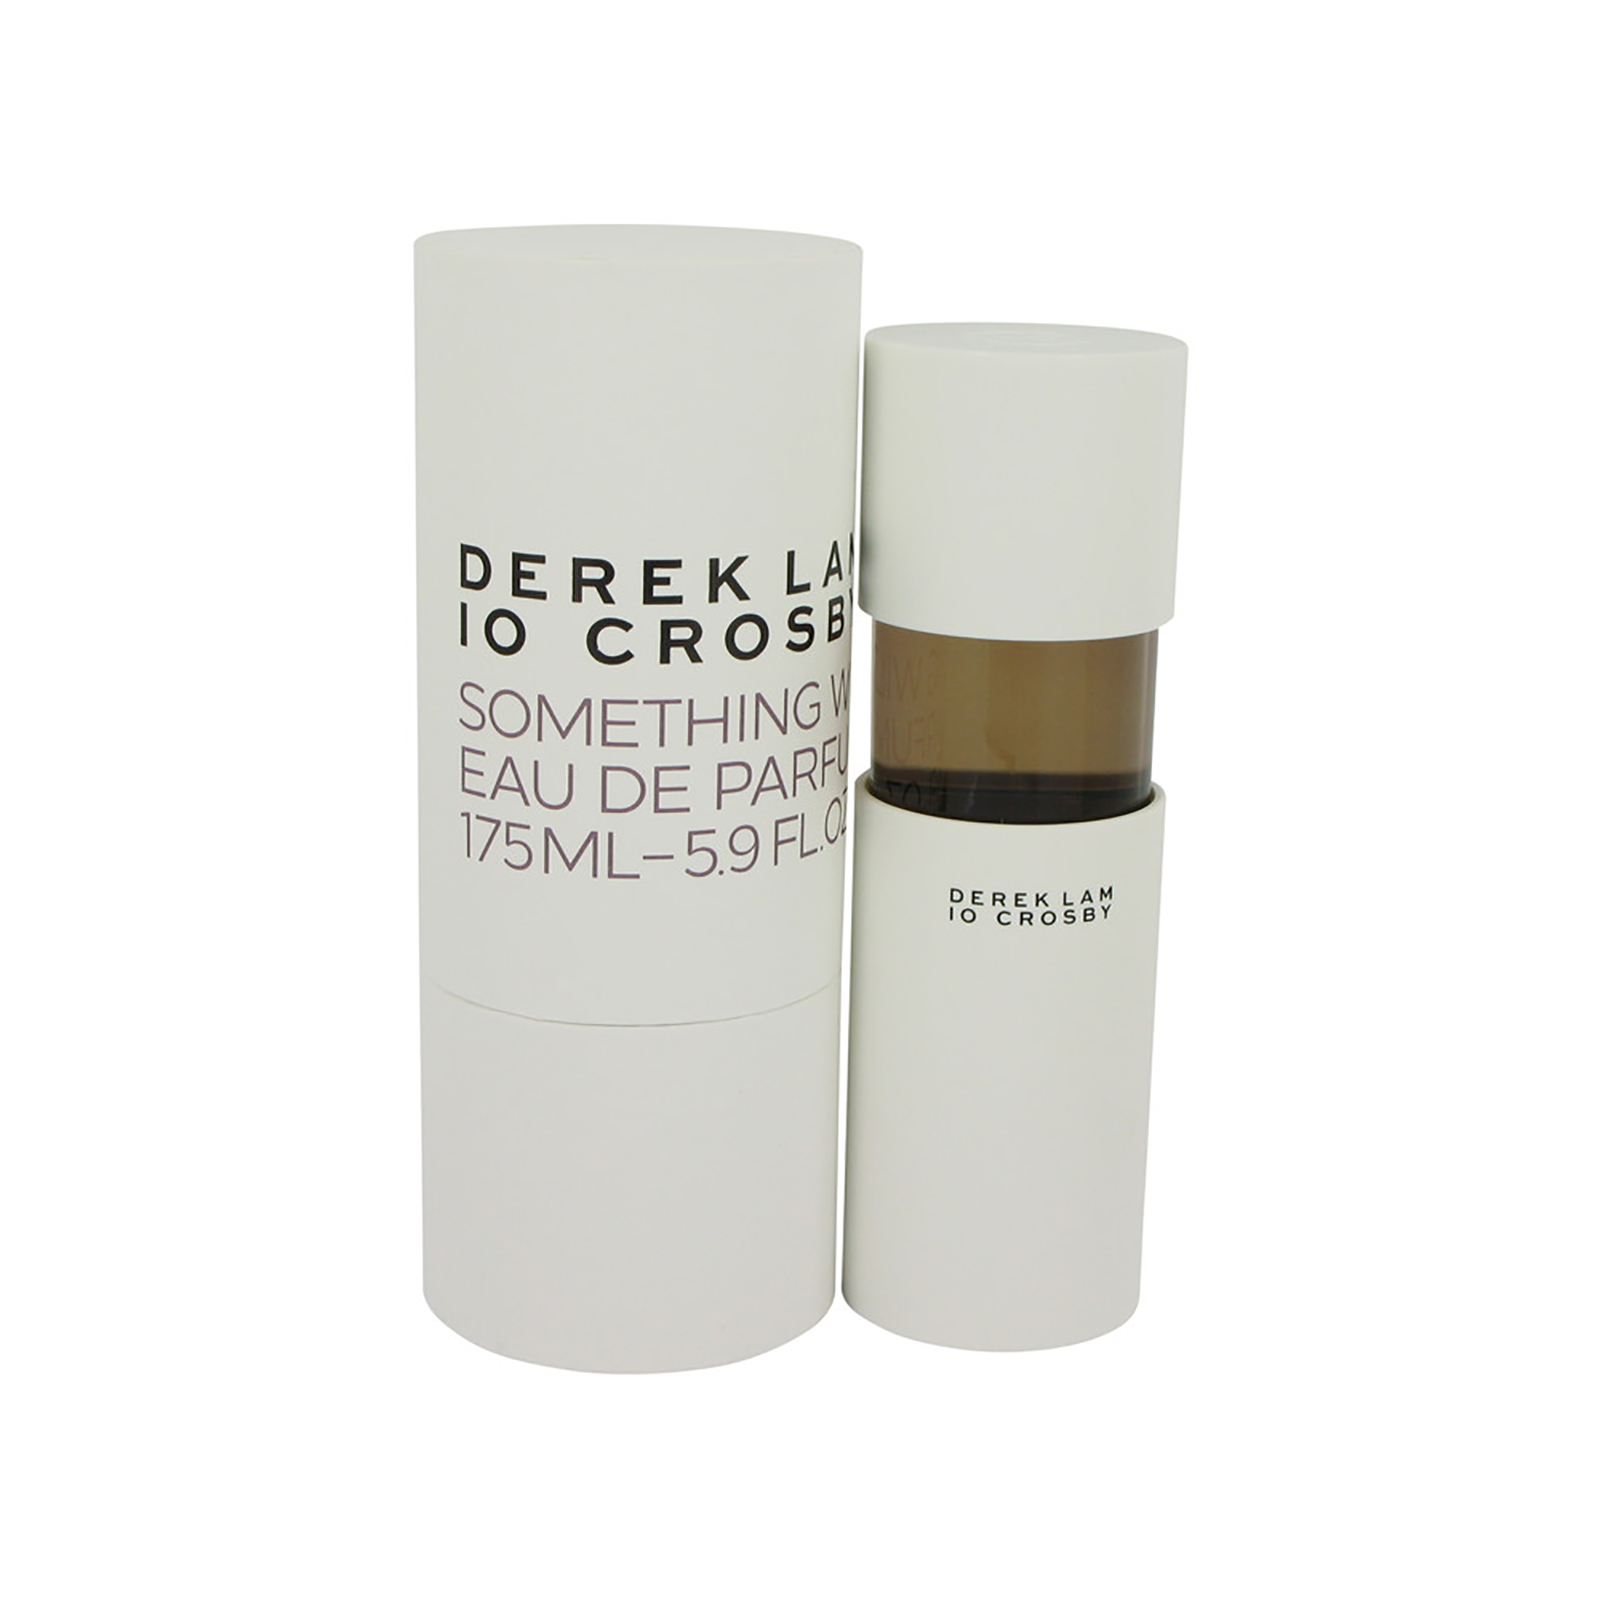 Derek Lam 10 Crosby Something Wild 5.9oz. Eau De Women Perfume Spray